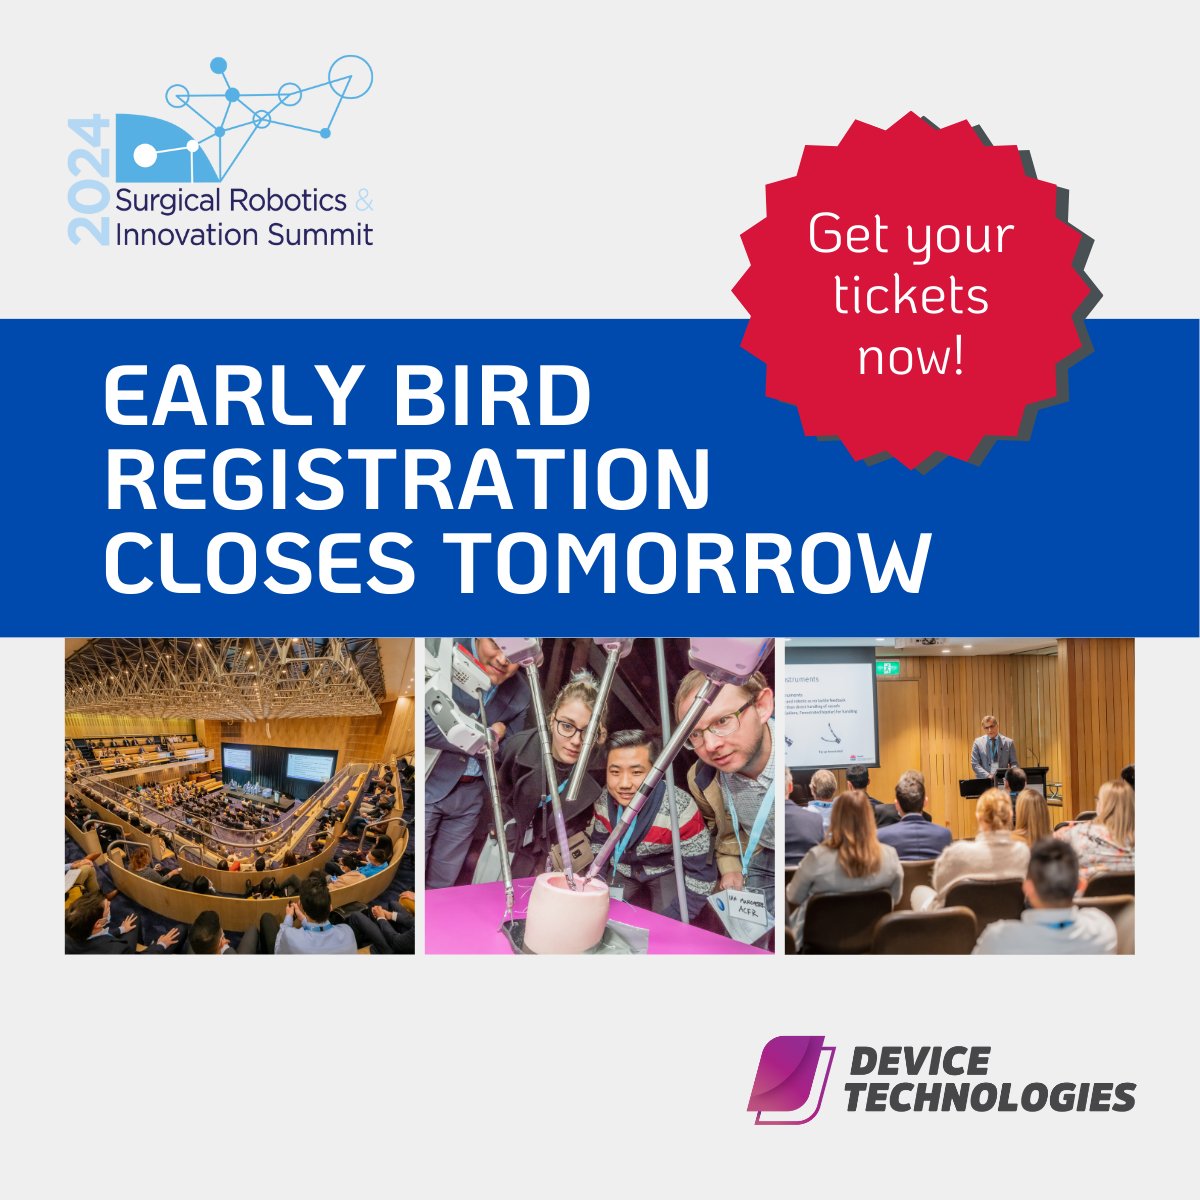 Early bird registration closes tomorrow! Get your tickets now: sydneyroboticssummit.com/registration #surgical #innovation #robotics #conference